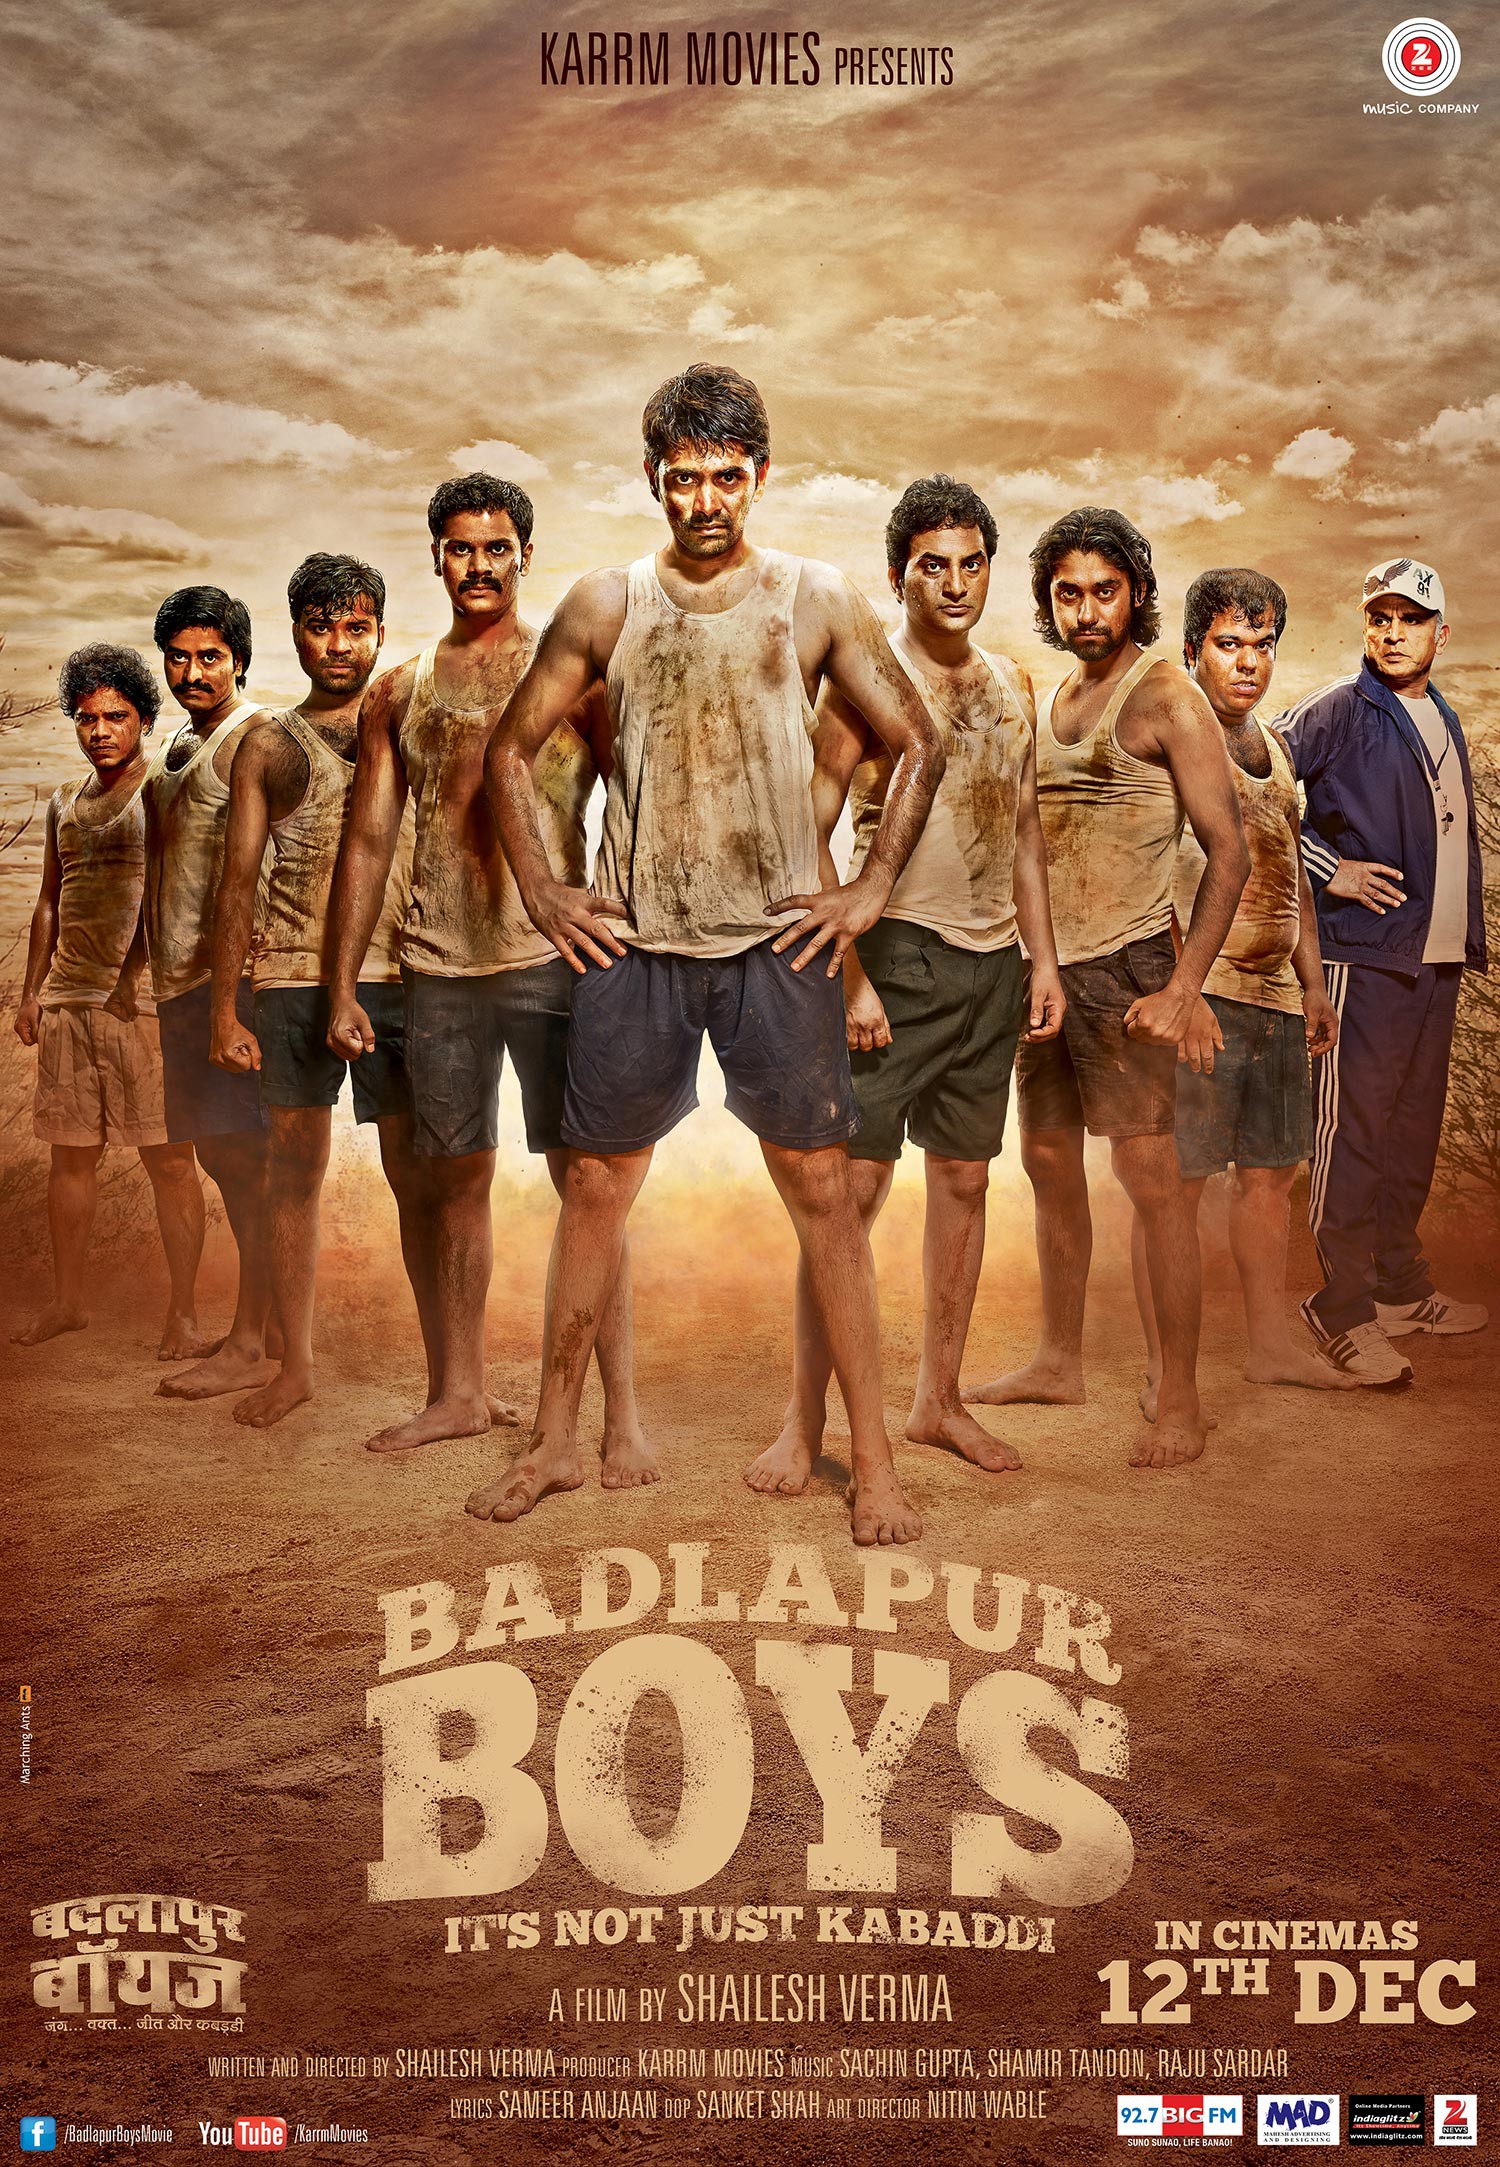 Mega Sized Movie Poster Image for Badlapur Boys 